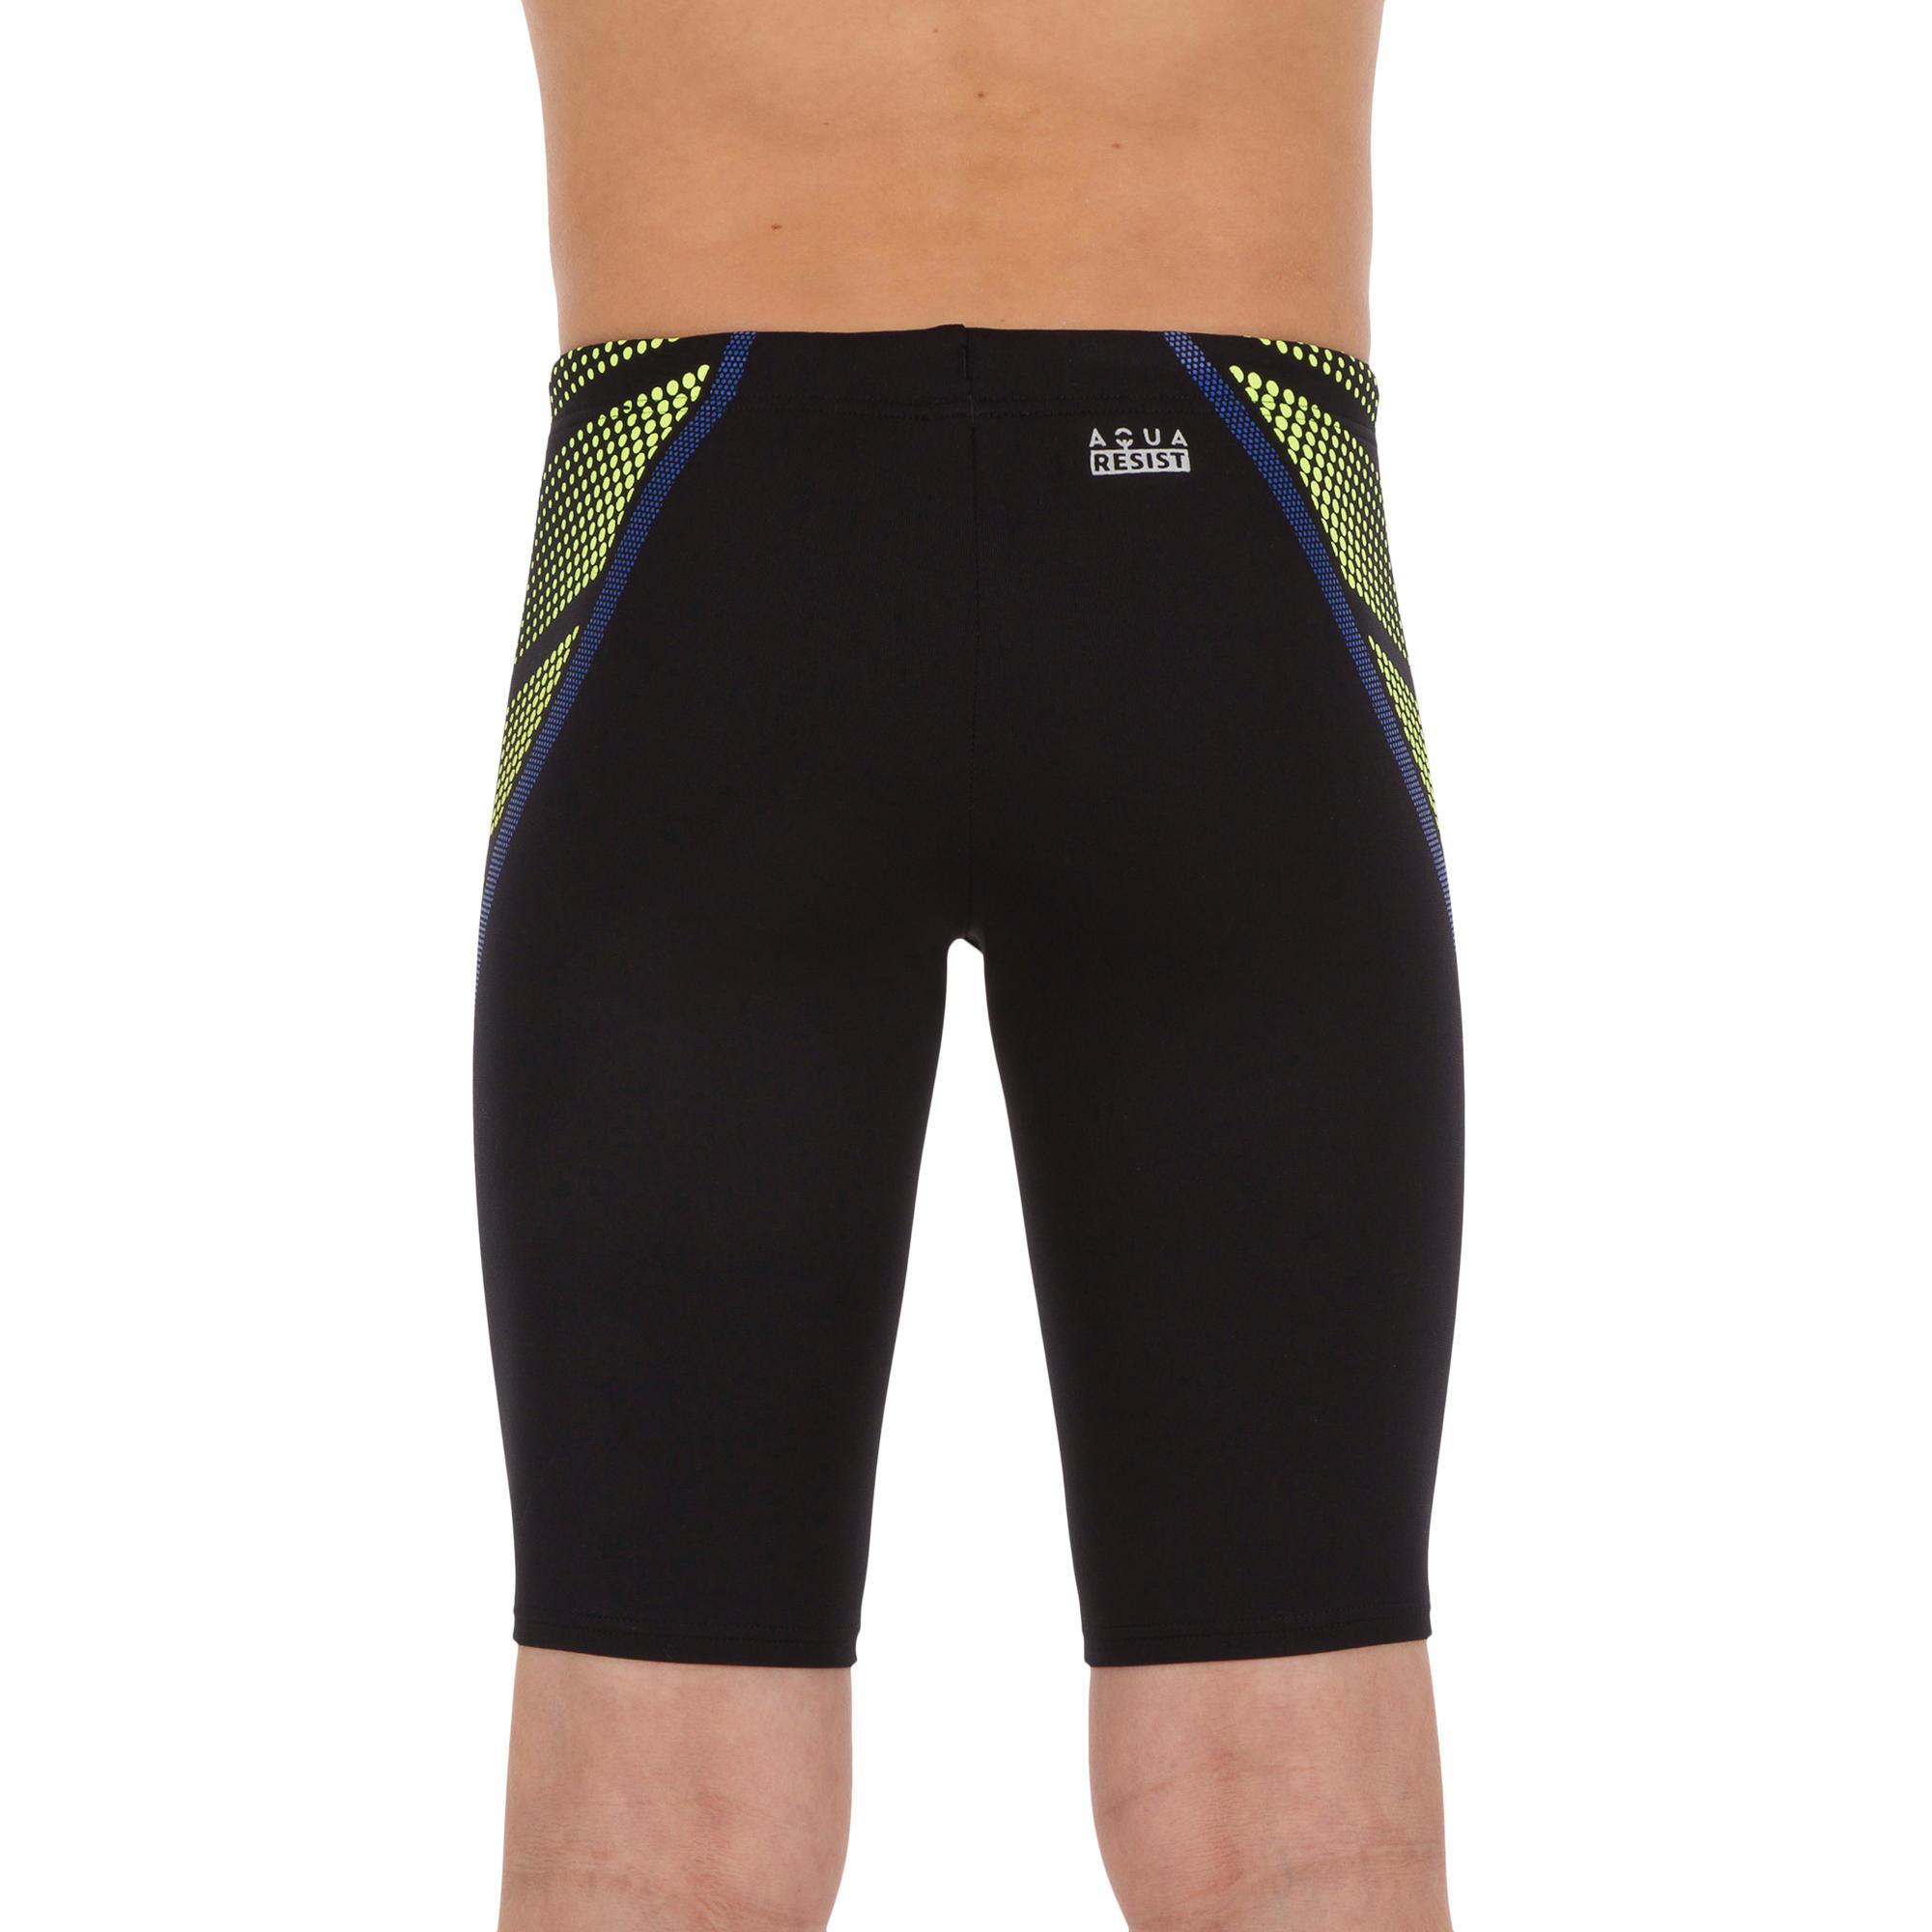 decathlon swim shorts